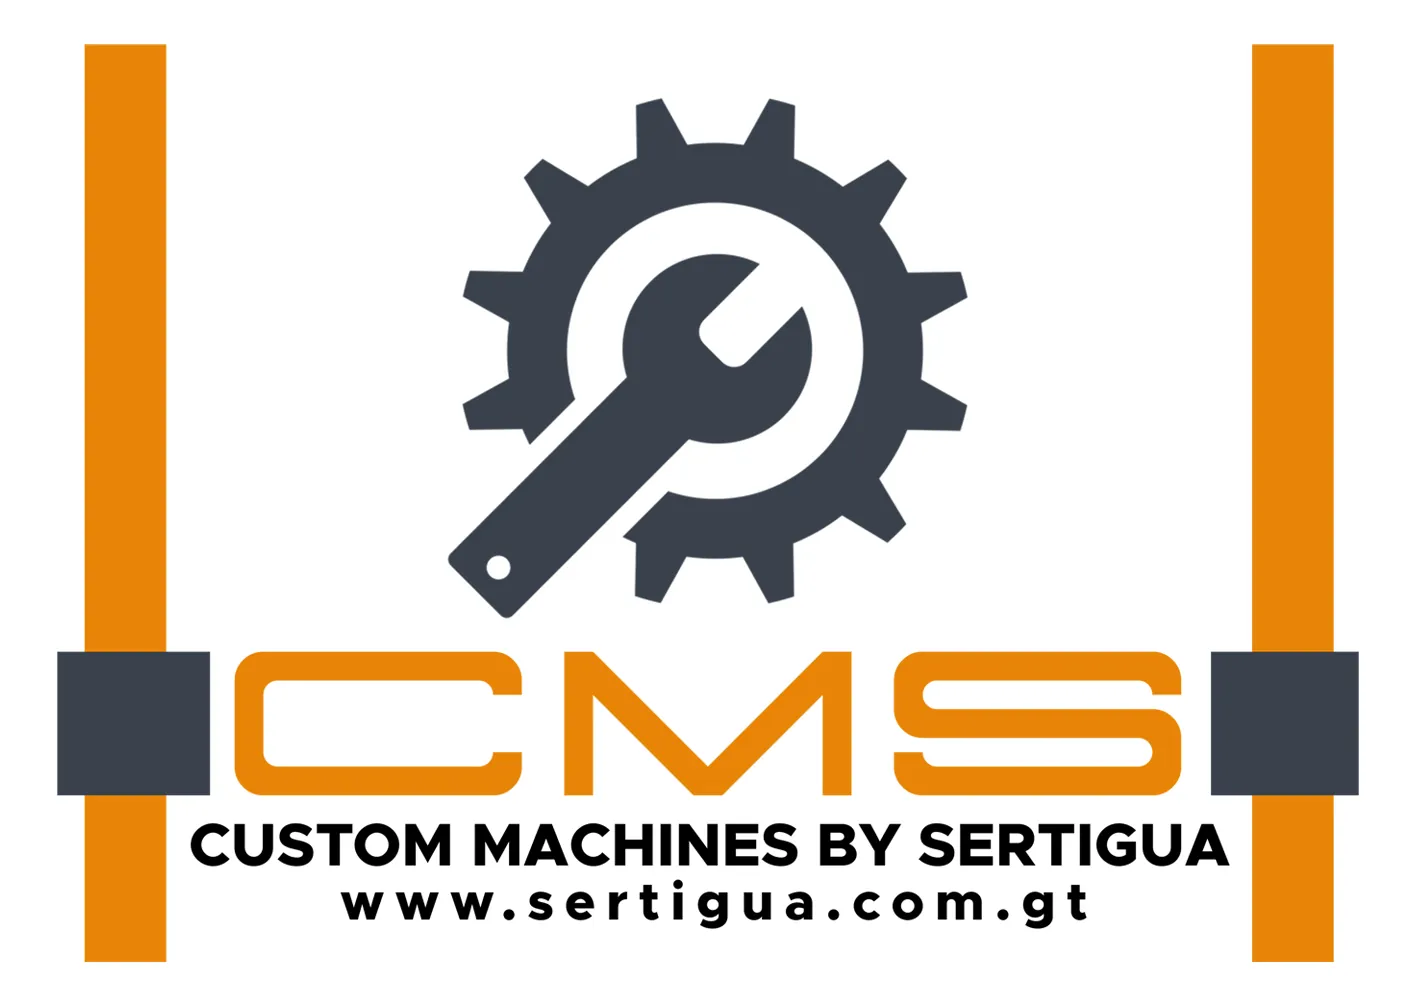 CUSTOM MACHINES BY SERTIGUA